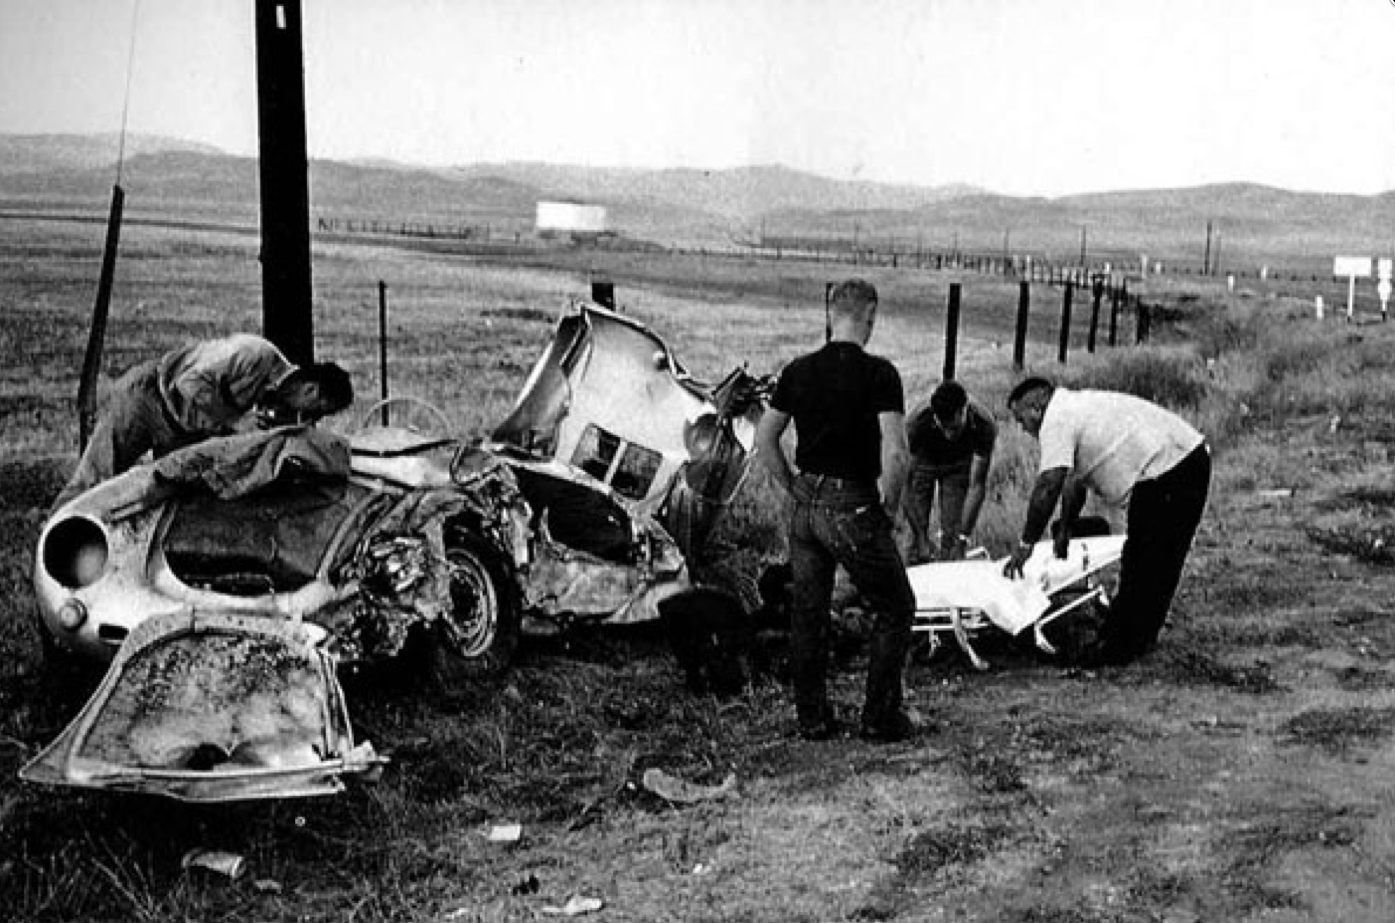 James Dean crash scene